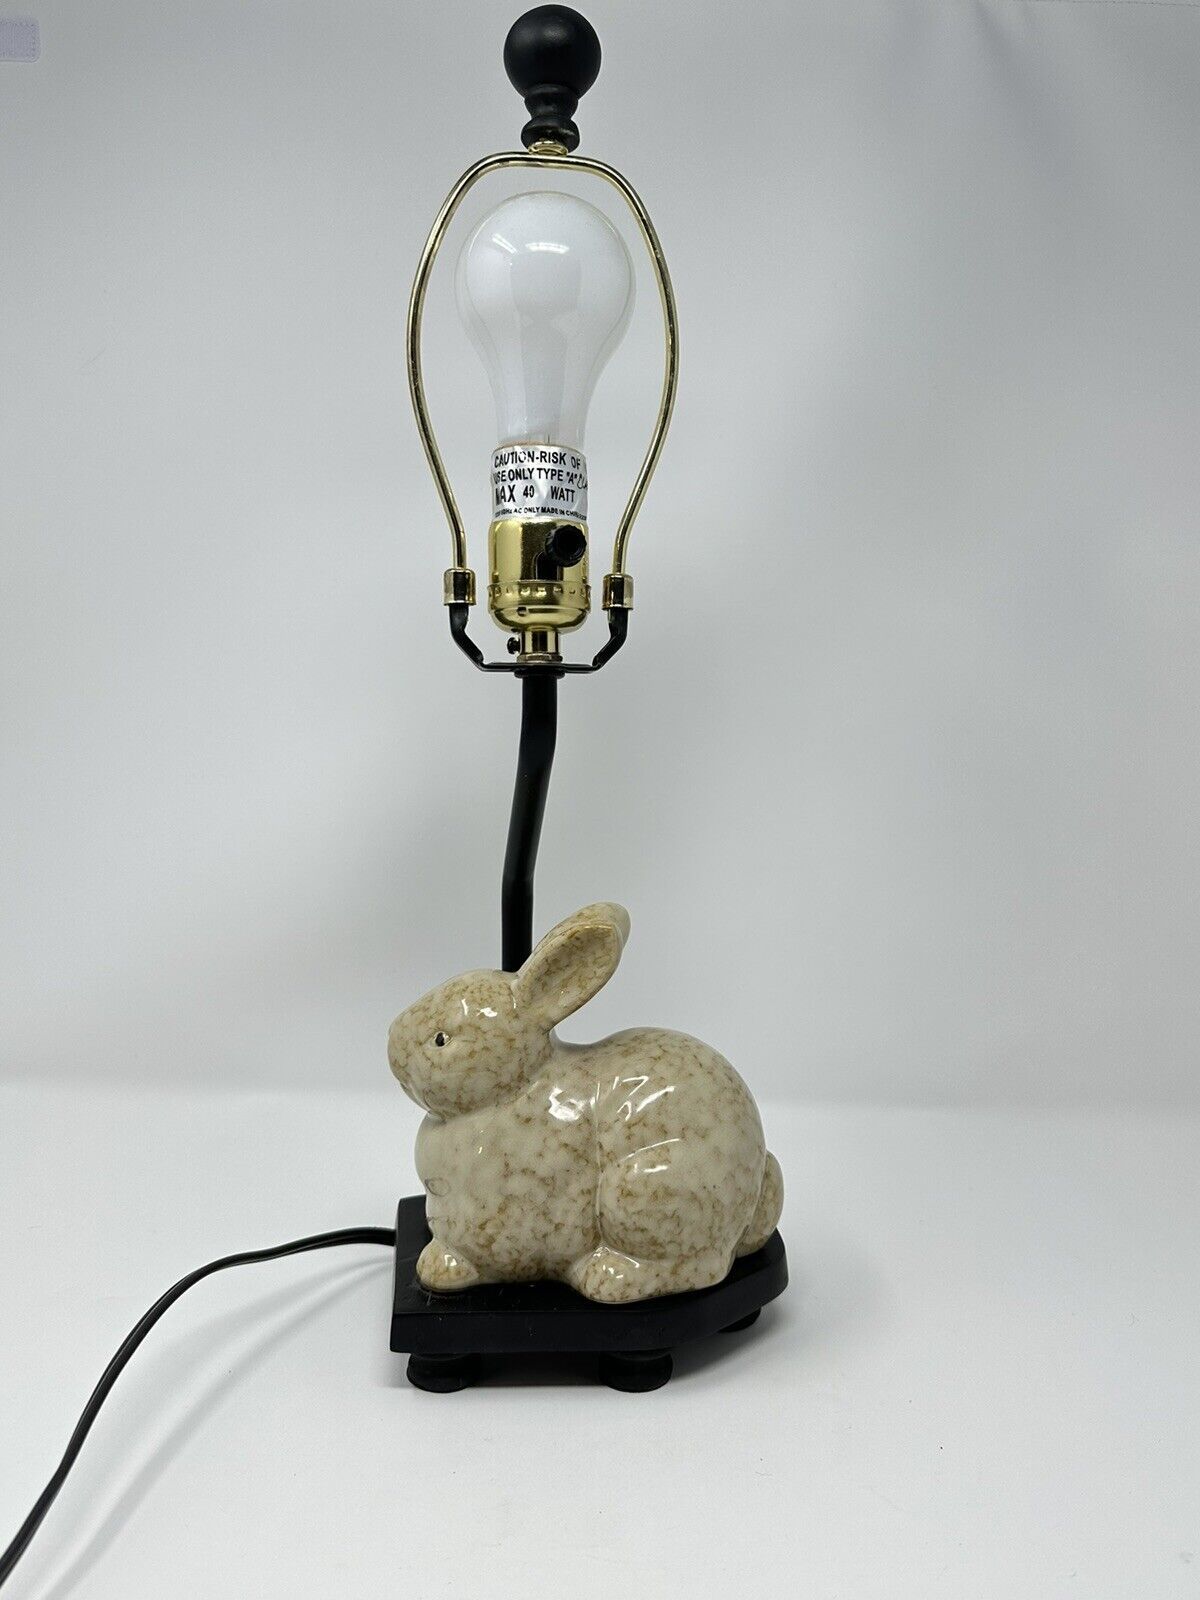 BUNNY RABBIT Table Lamp Finial Cream Ceramic Working Cond. with Shade 18” Tall  | eBay | eBay US